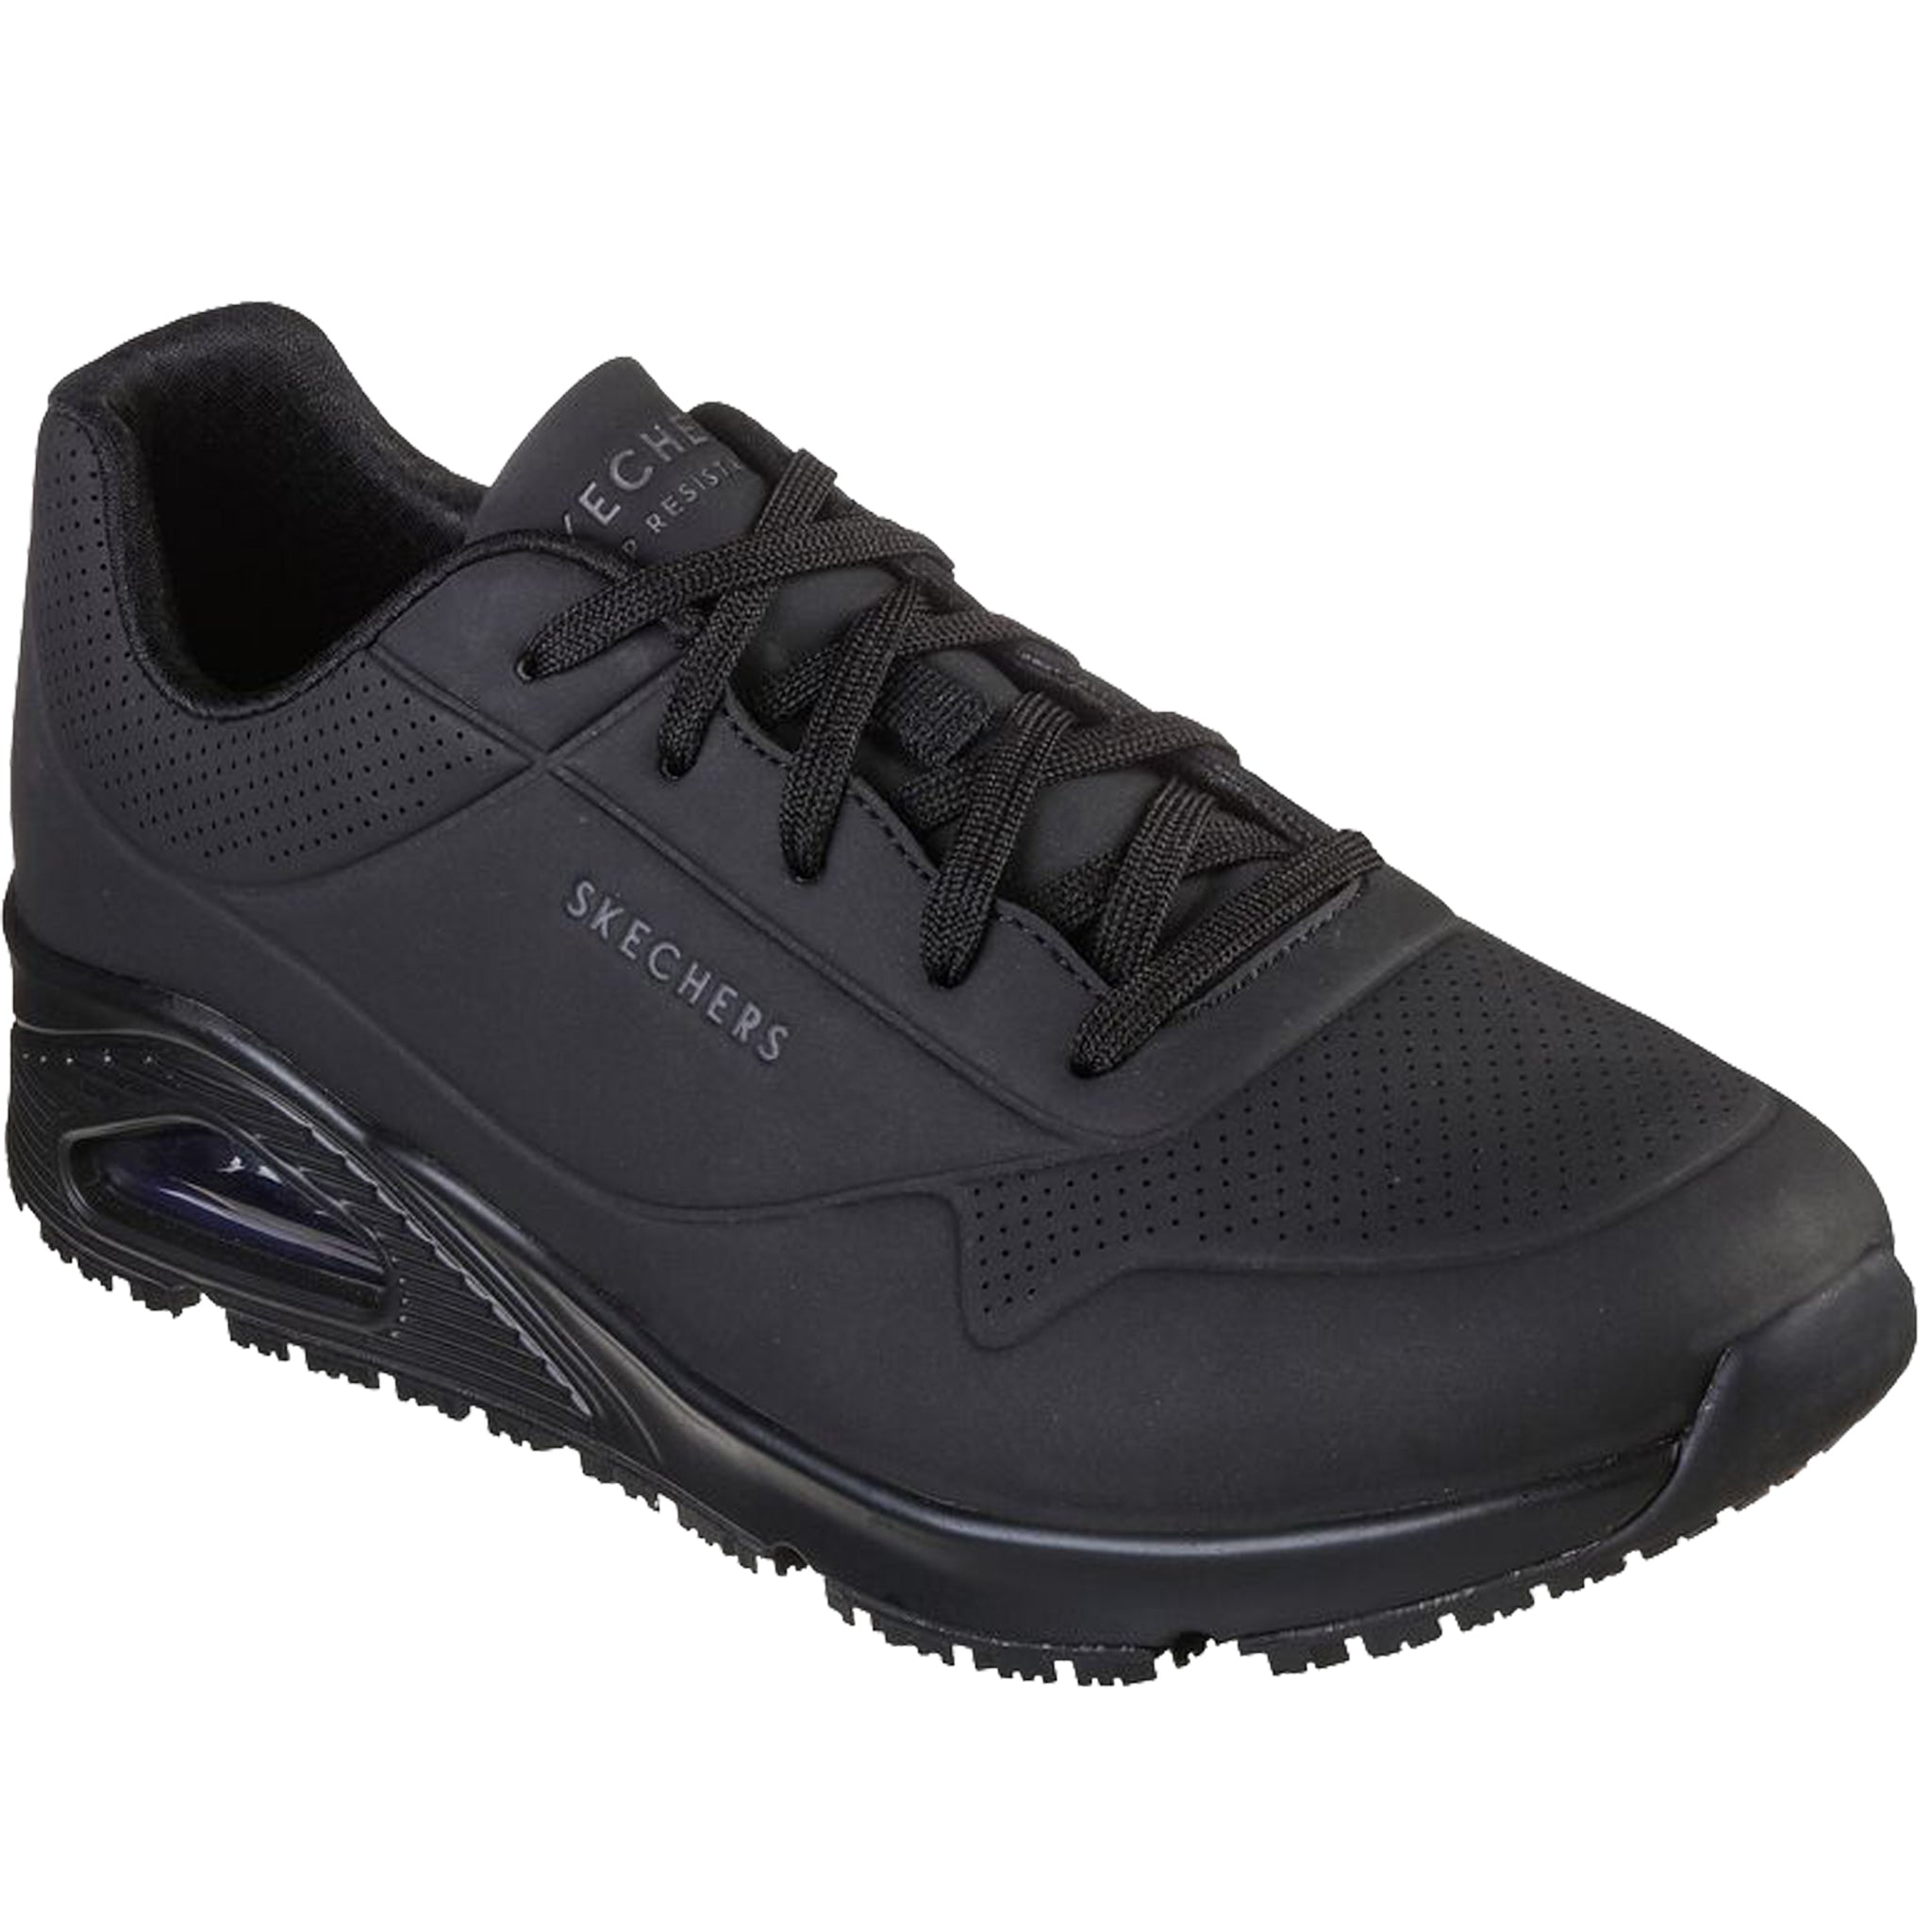 Skechers Men's 200054 Uno SR Satal Slip Black Work Shoes – That Shoe Store and More